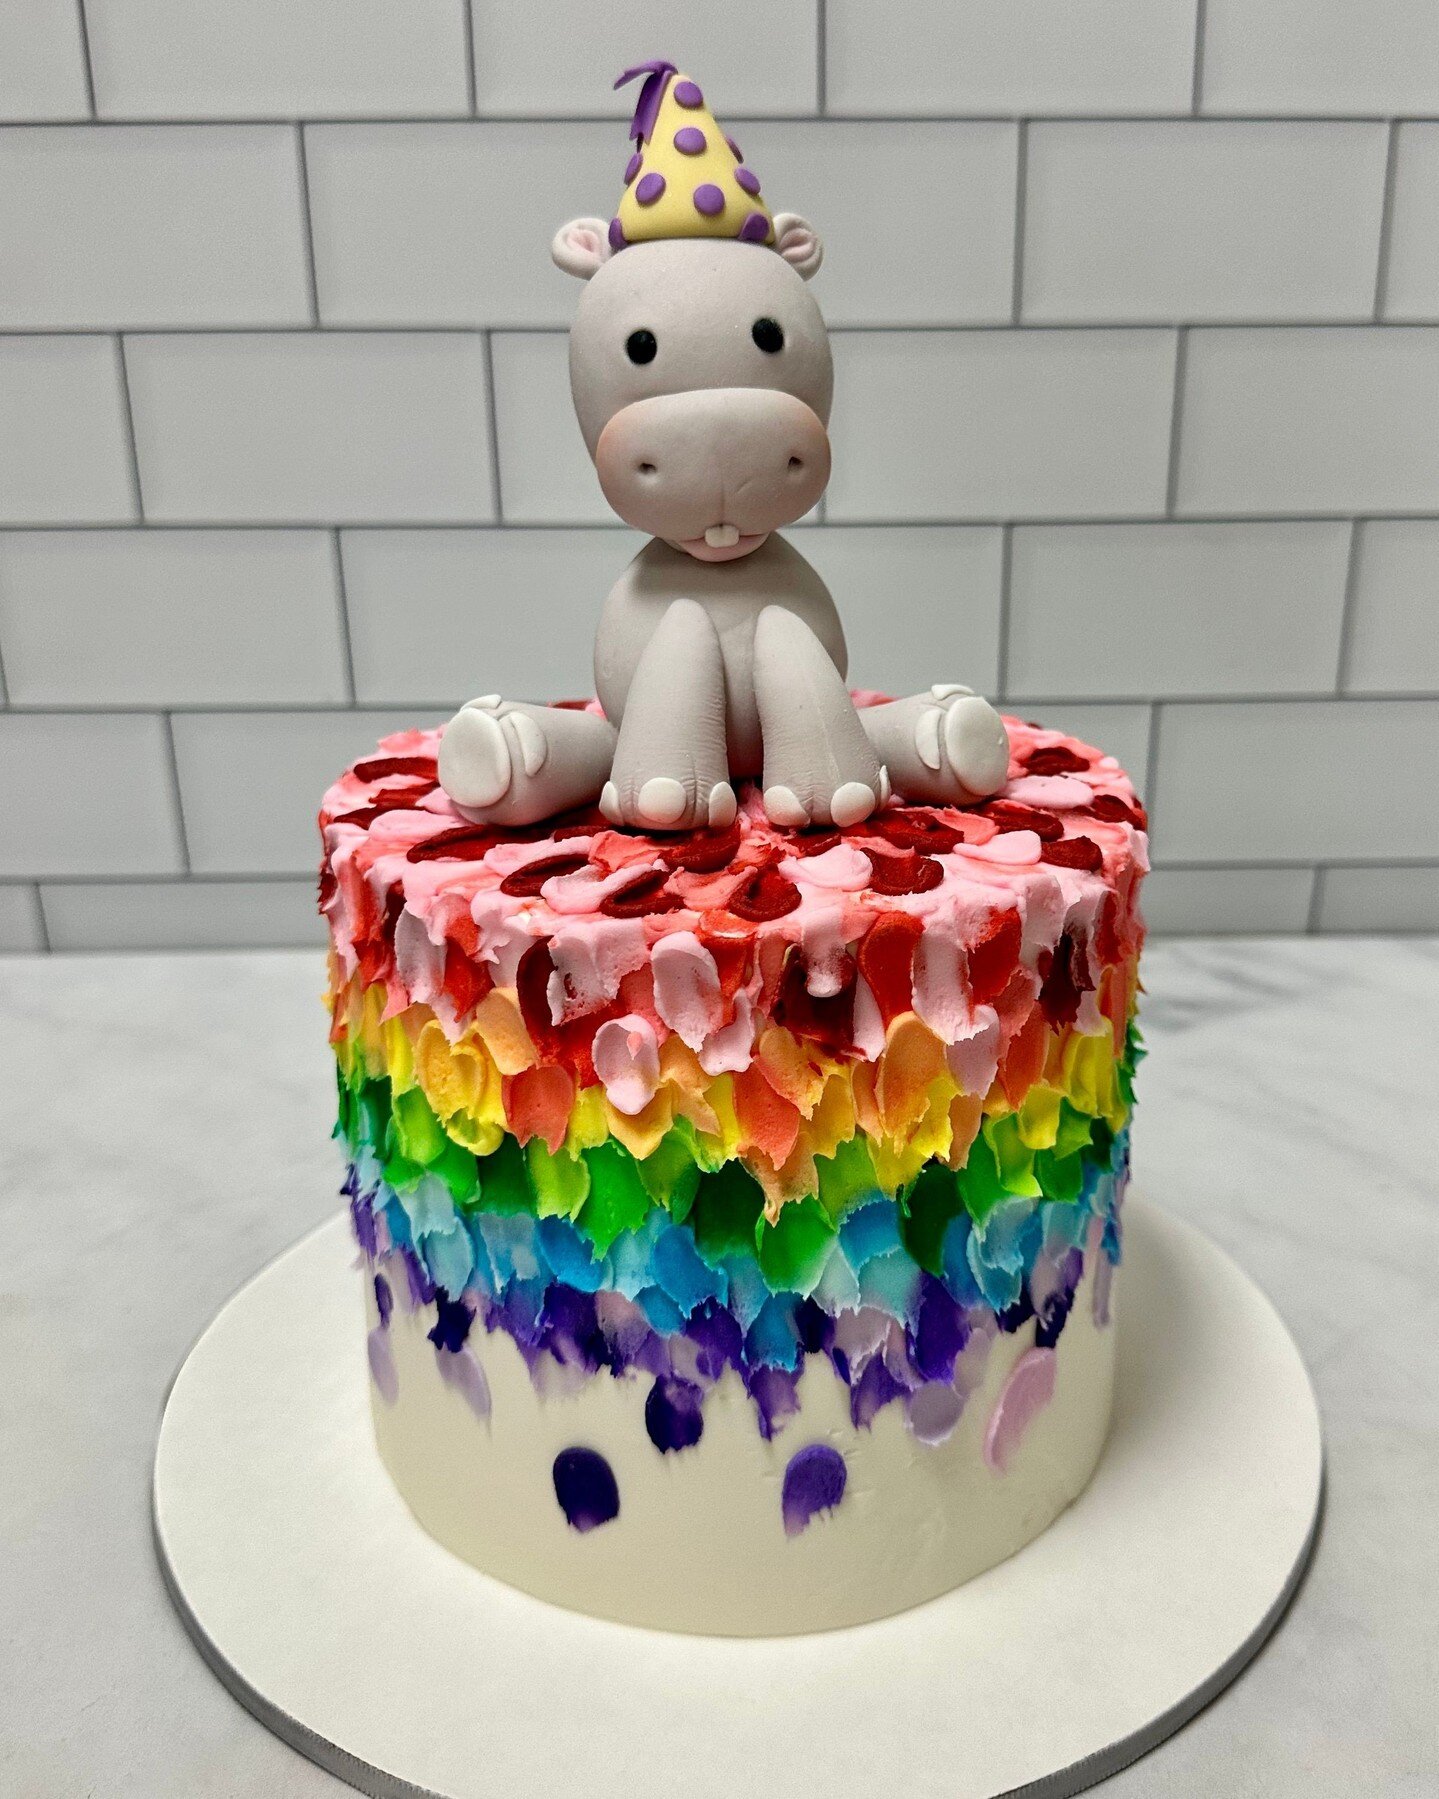 A baby hippo birthday with delicate drops of rainbow! 🌈🦛

#babyhippo #rainbowdrops #kupcakekitchen #wantcake #cakeinspiration #cakeart #birthdaycakeideas #birthdayideas #birthdaypartyideas #birthdayinspiration #birthdayideasforkids #cakedesigner #d